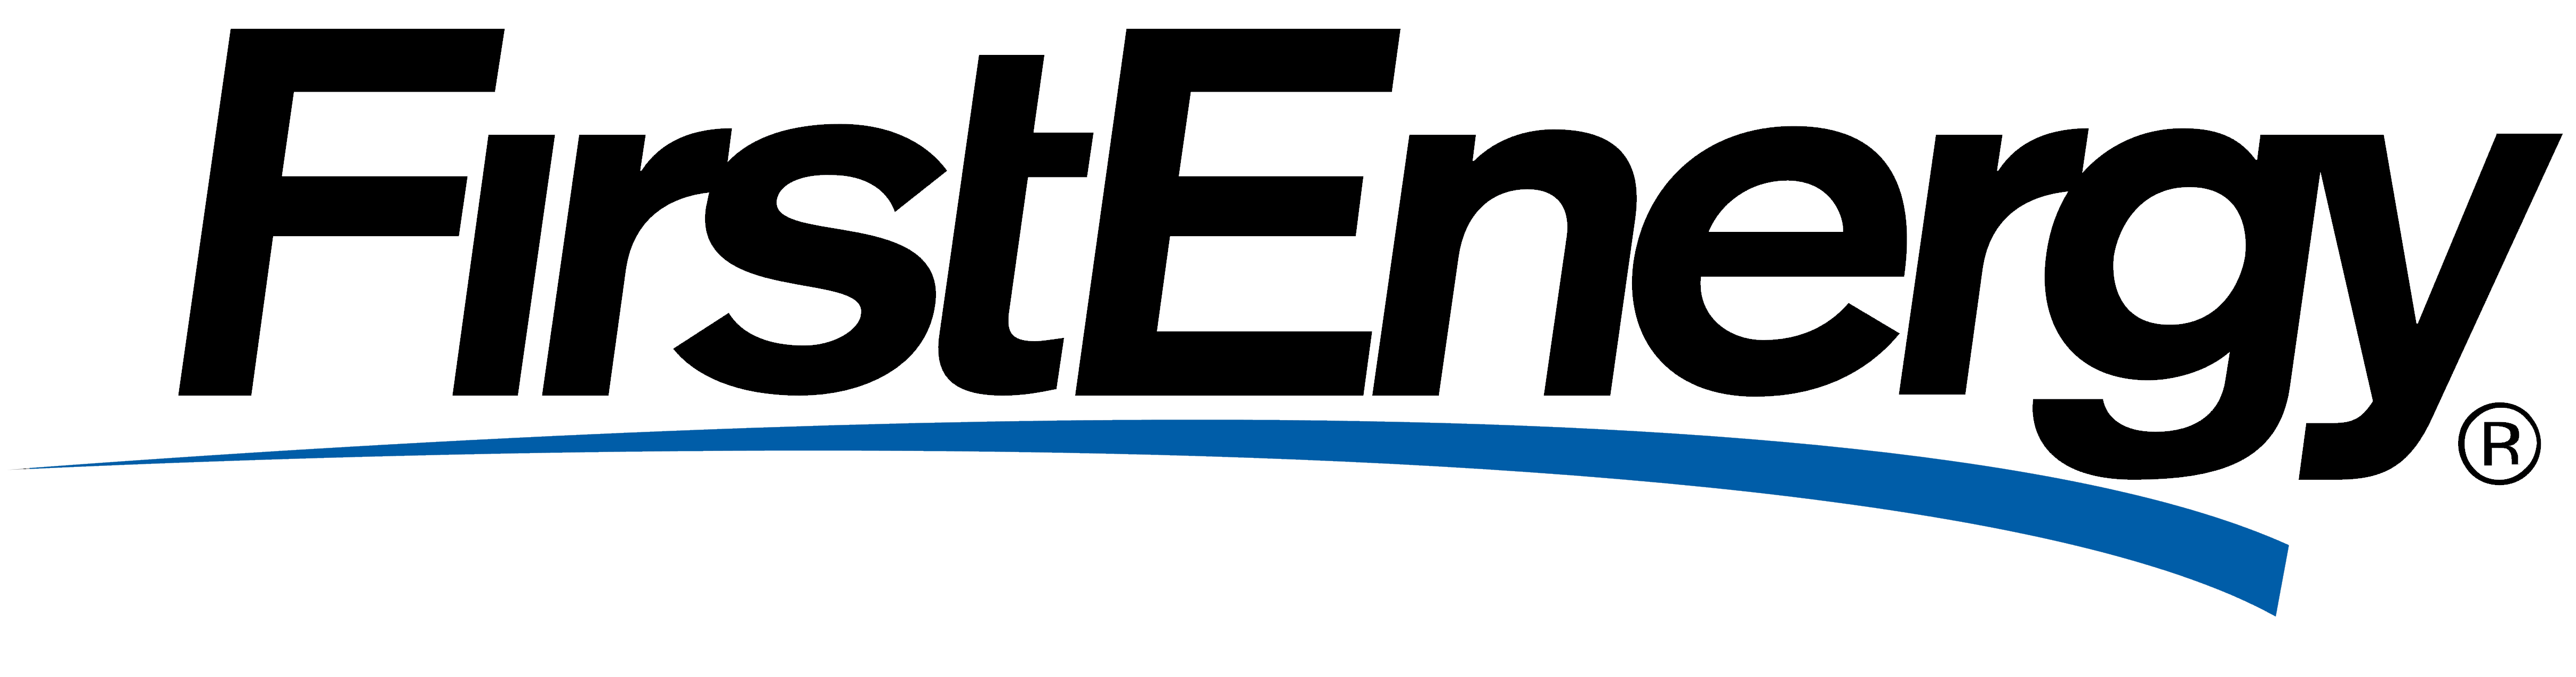 FirstEnergy sponsor logo